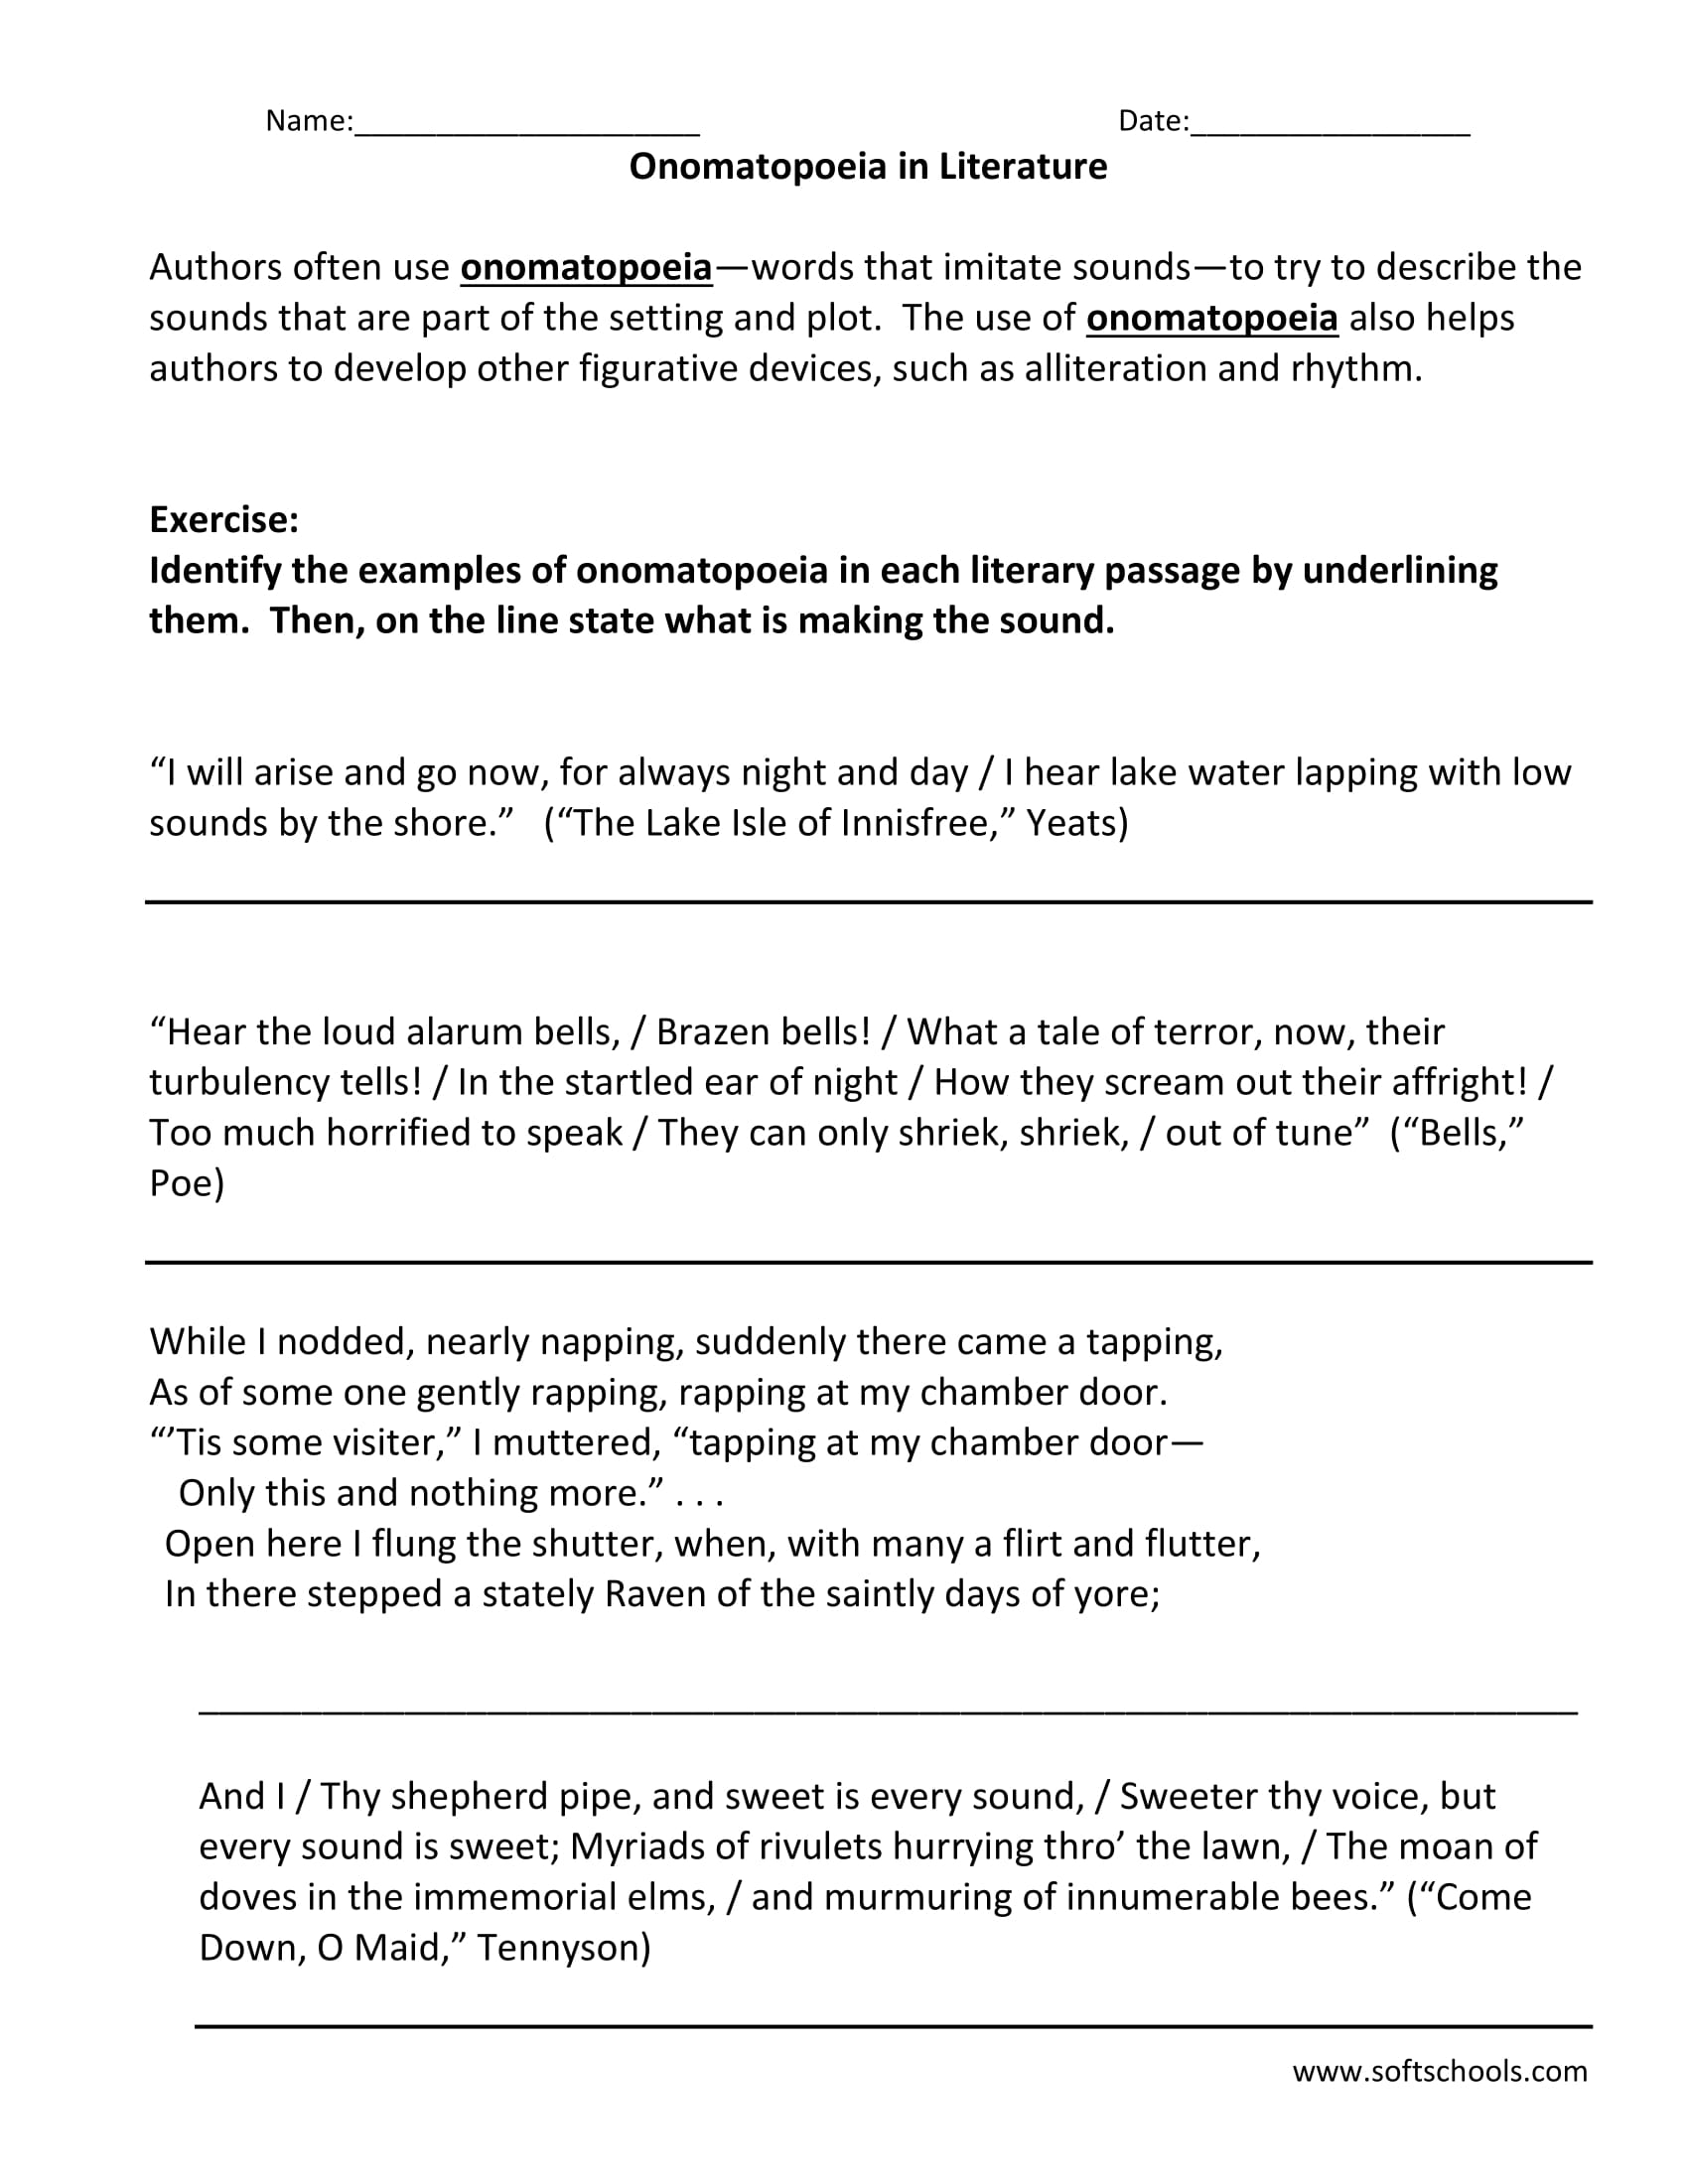 9-onomatopoeia-examples-in-literature-pdf-examples